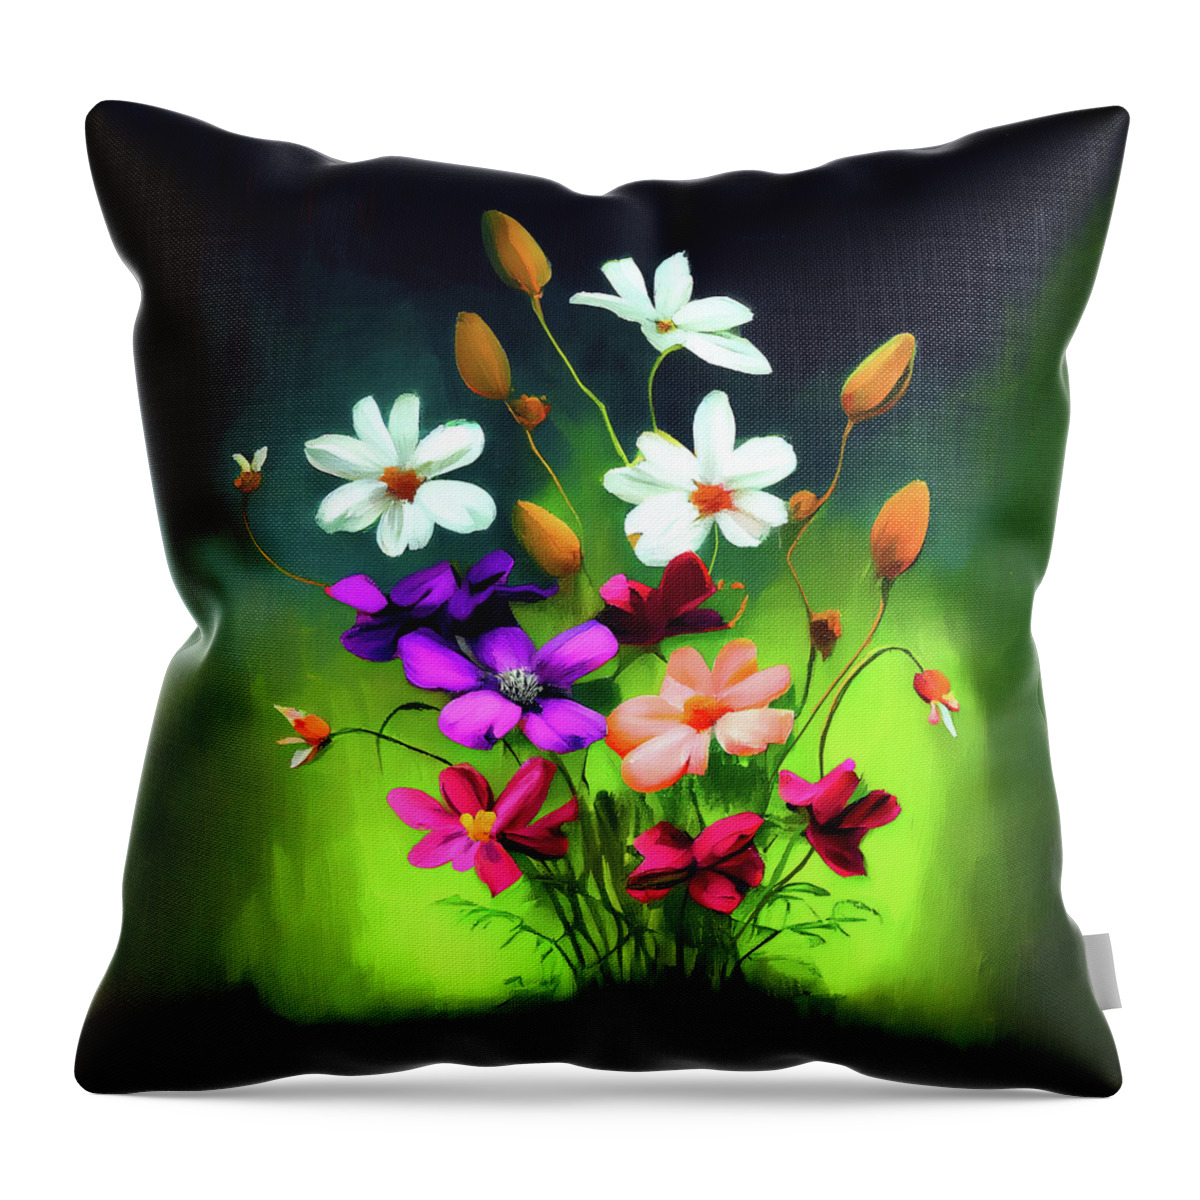 Wildflowers Throw Pillow featuring the digital art Joie De Vivre by Mark Tisdale